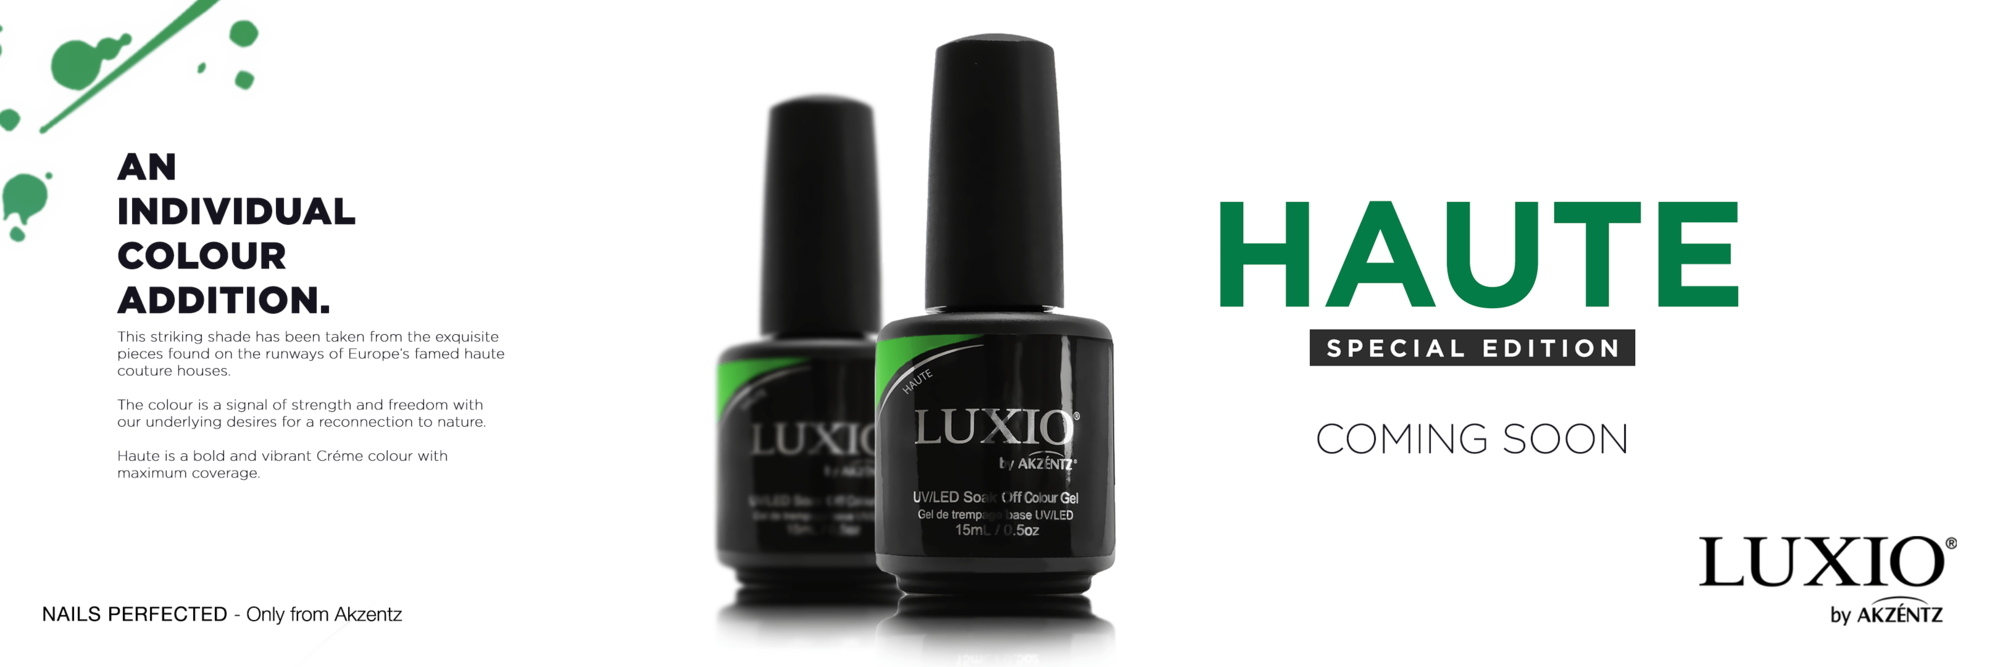 Haute перевод. Luxio Haute. Маникюр Luxio. Luxio Haute зеленый. Новые цвета лака люксио.